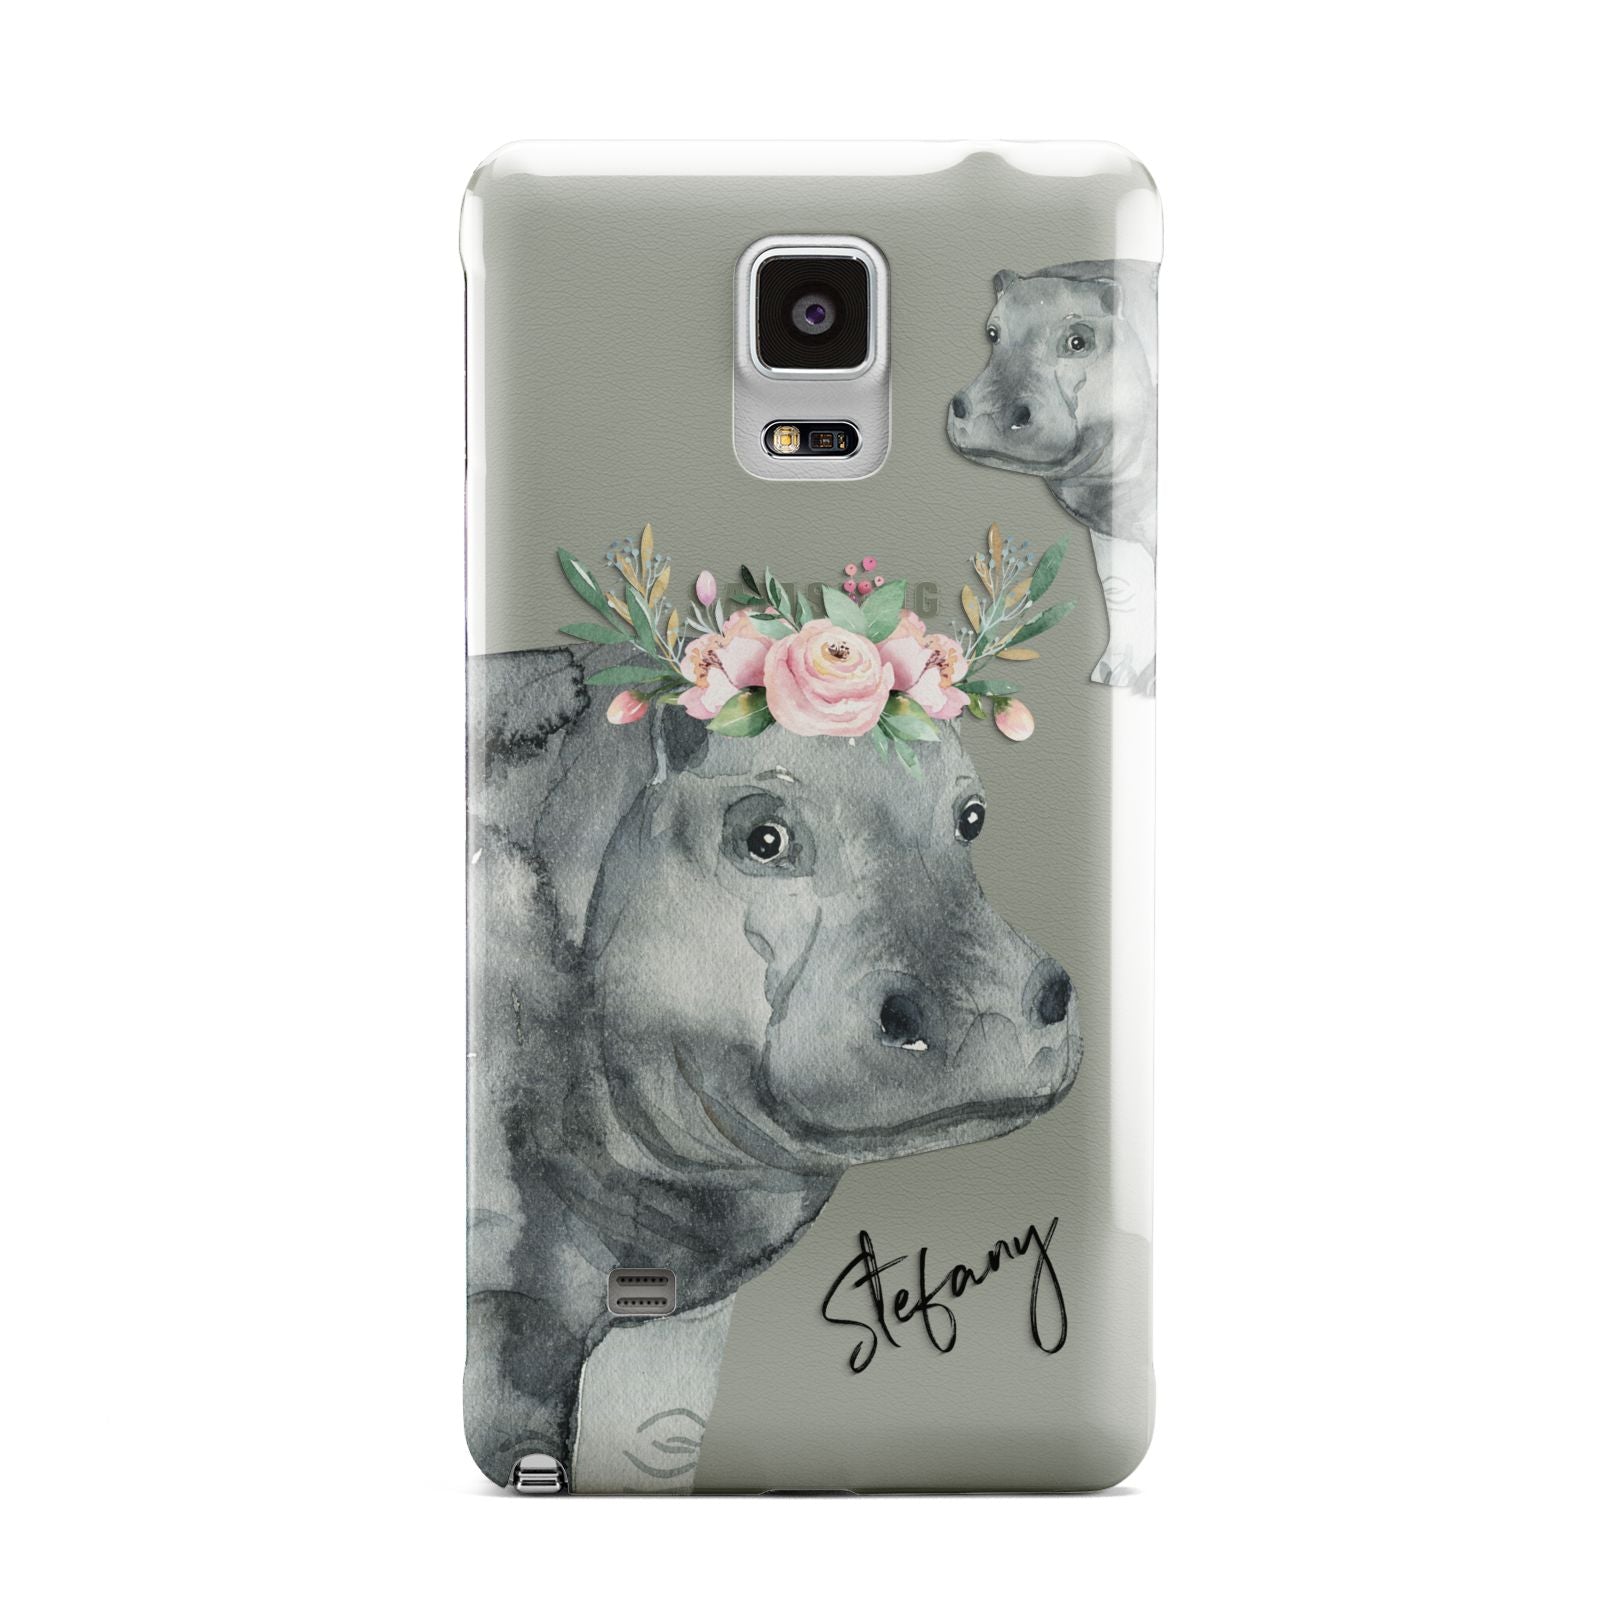 Personalised Hippopotamus Samsung Galaxy Note 4 Case